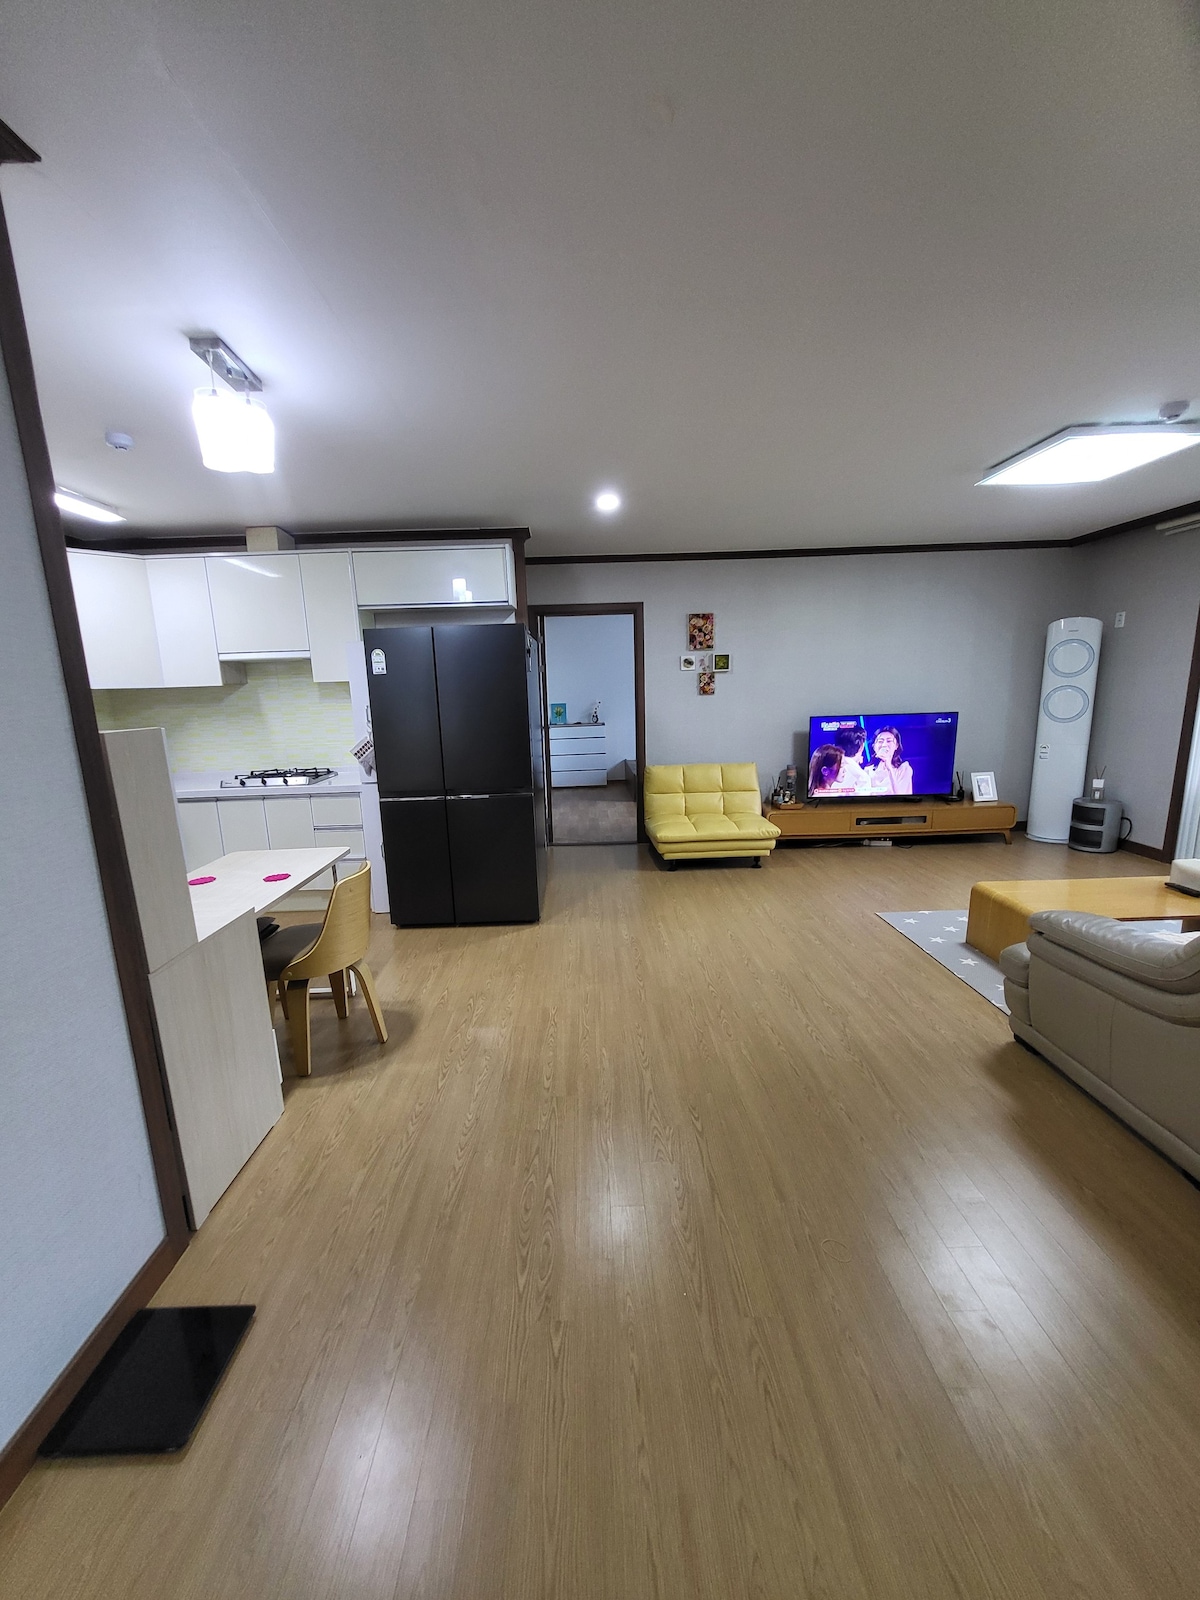 Yangyang Eoseongjeon Valley # 32 pyeong私人膳宿公寓#火坑#烧烤#院子里露营体验